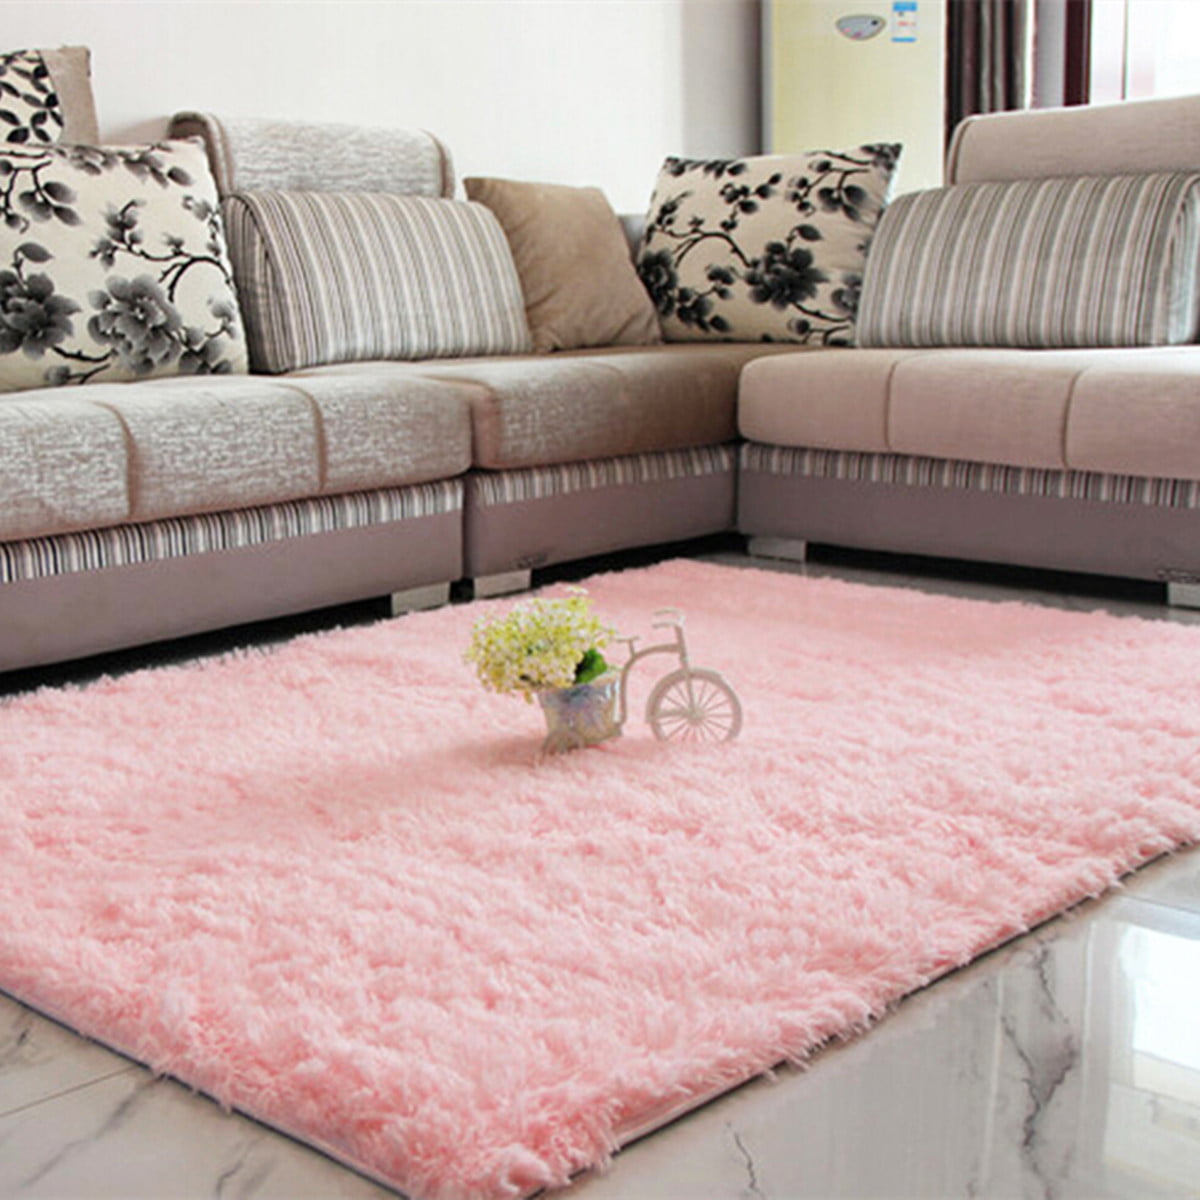 Cooper Girl Egg Area Rug Mat Carpet 6'8x4'10 for Living Room Bedroom Dining Room 